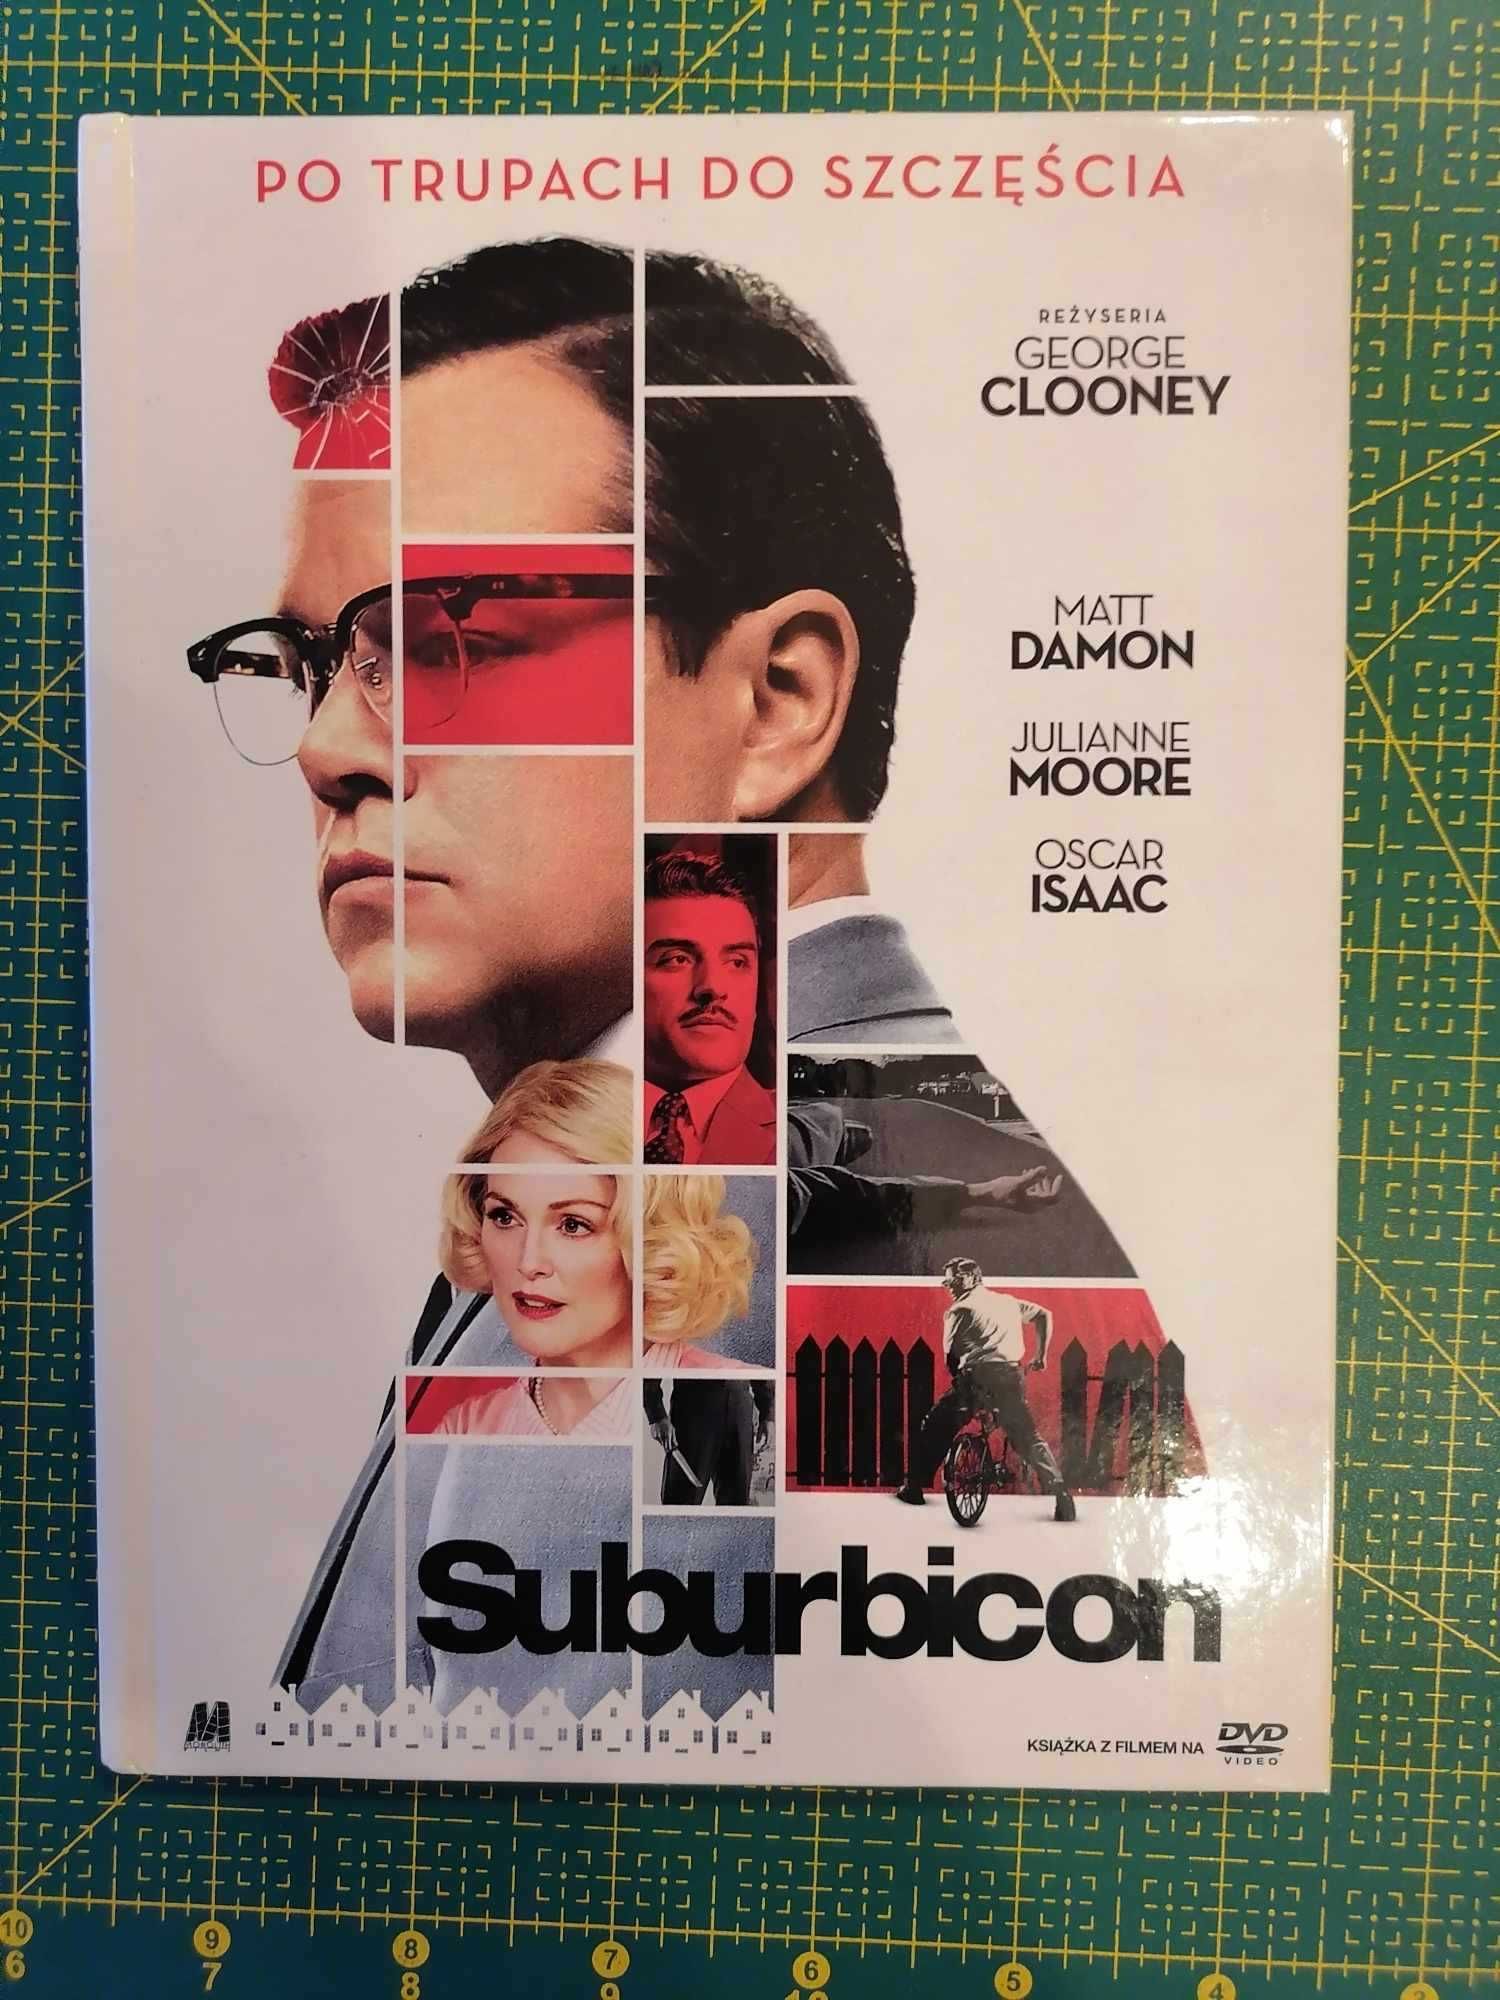 Film DVD z książką "Suburbicon"